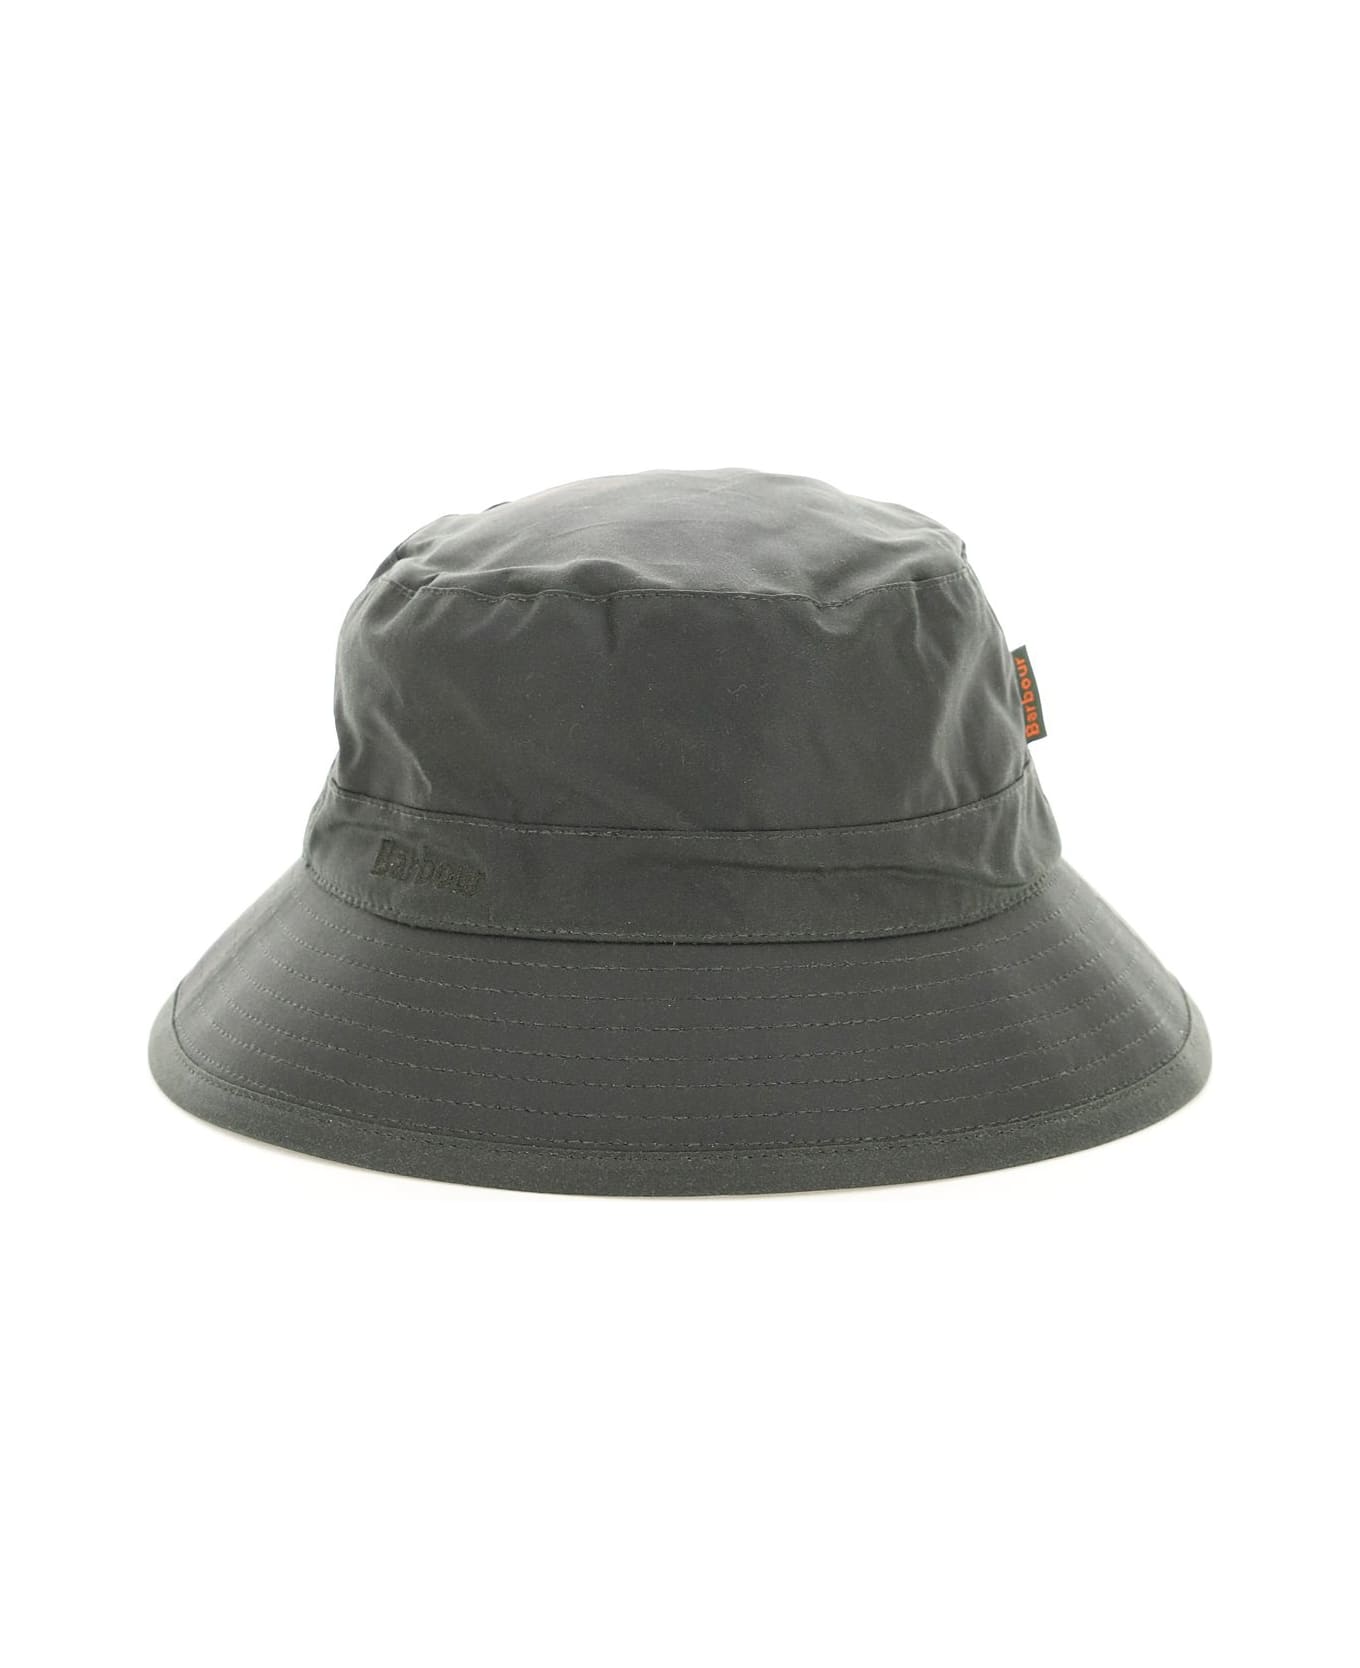 Barbour Waxed Bucket Hat - SAGE (Green)